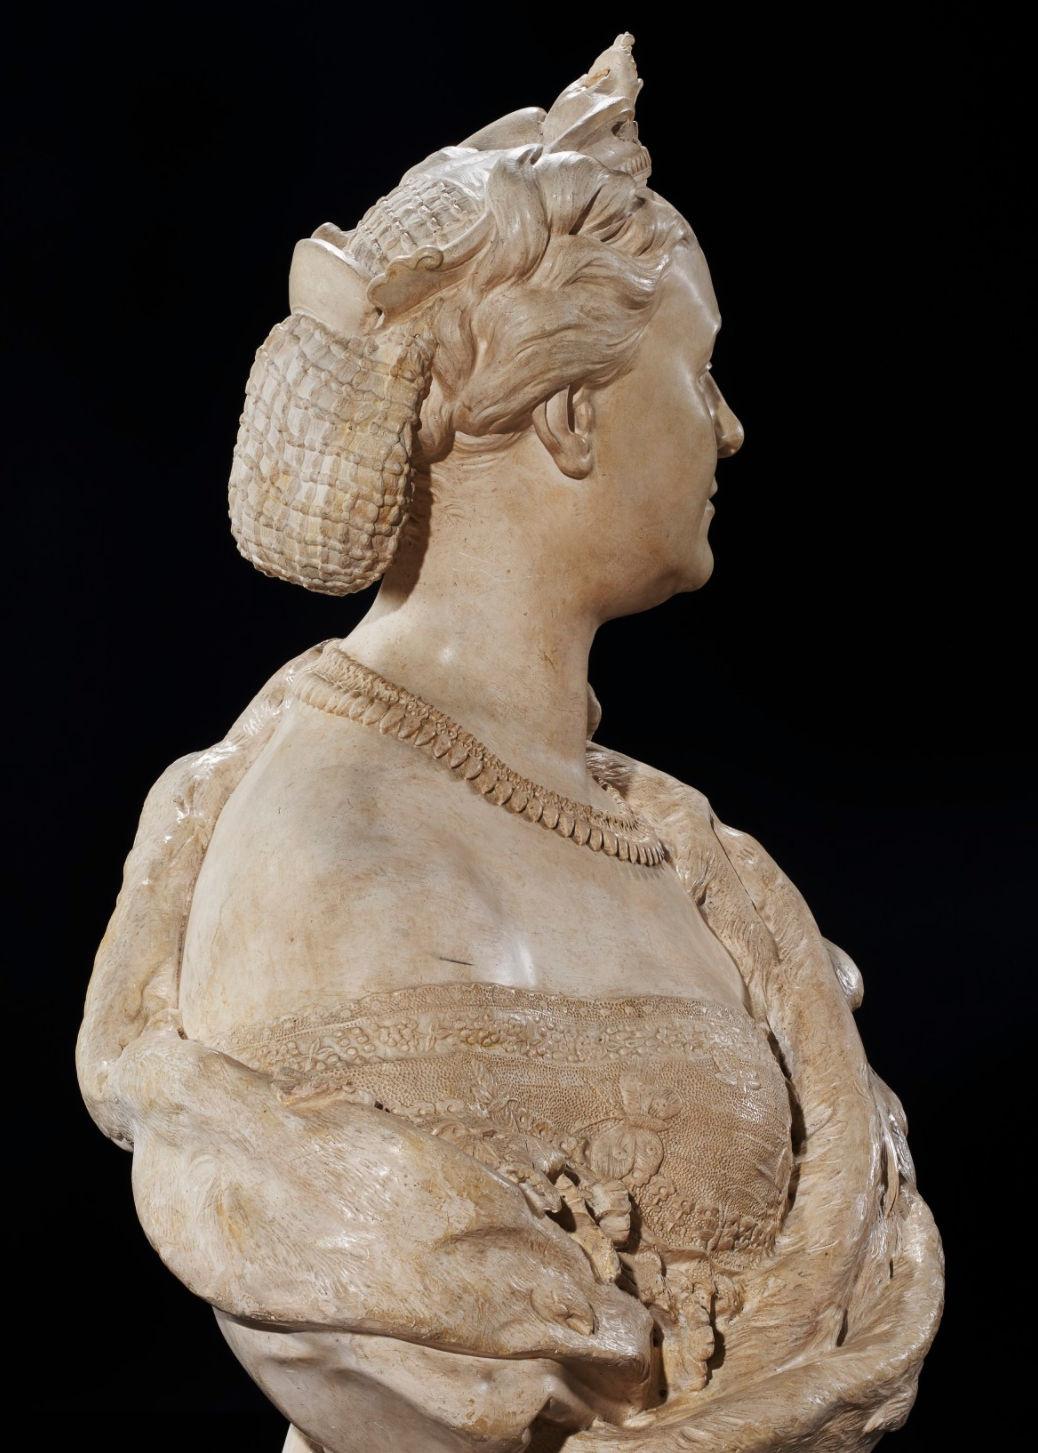 19th Century Mathilde Bonaparte Bust by Jean-Baptiste Carpeaux (1827-1875)